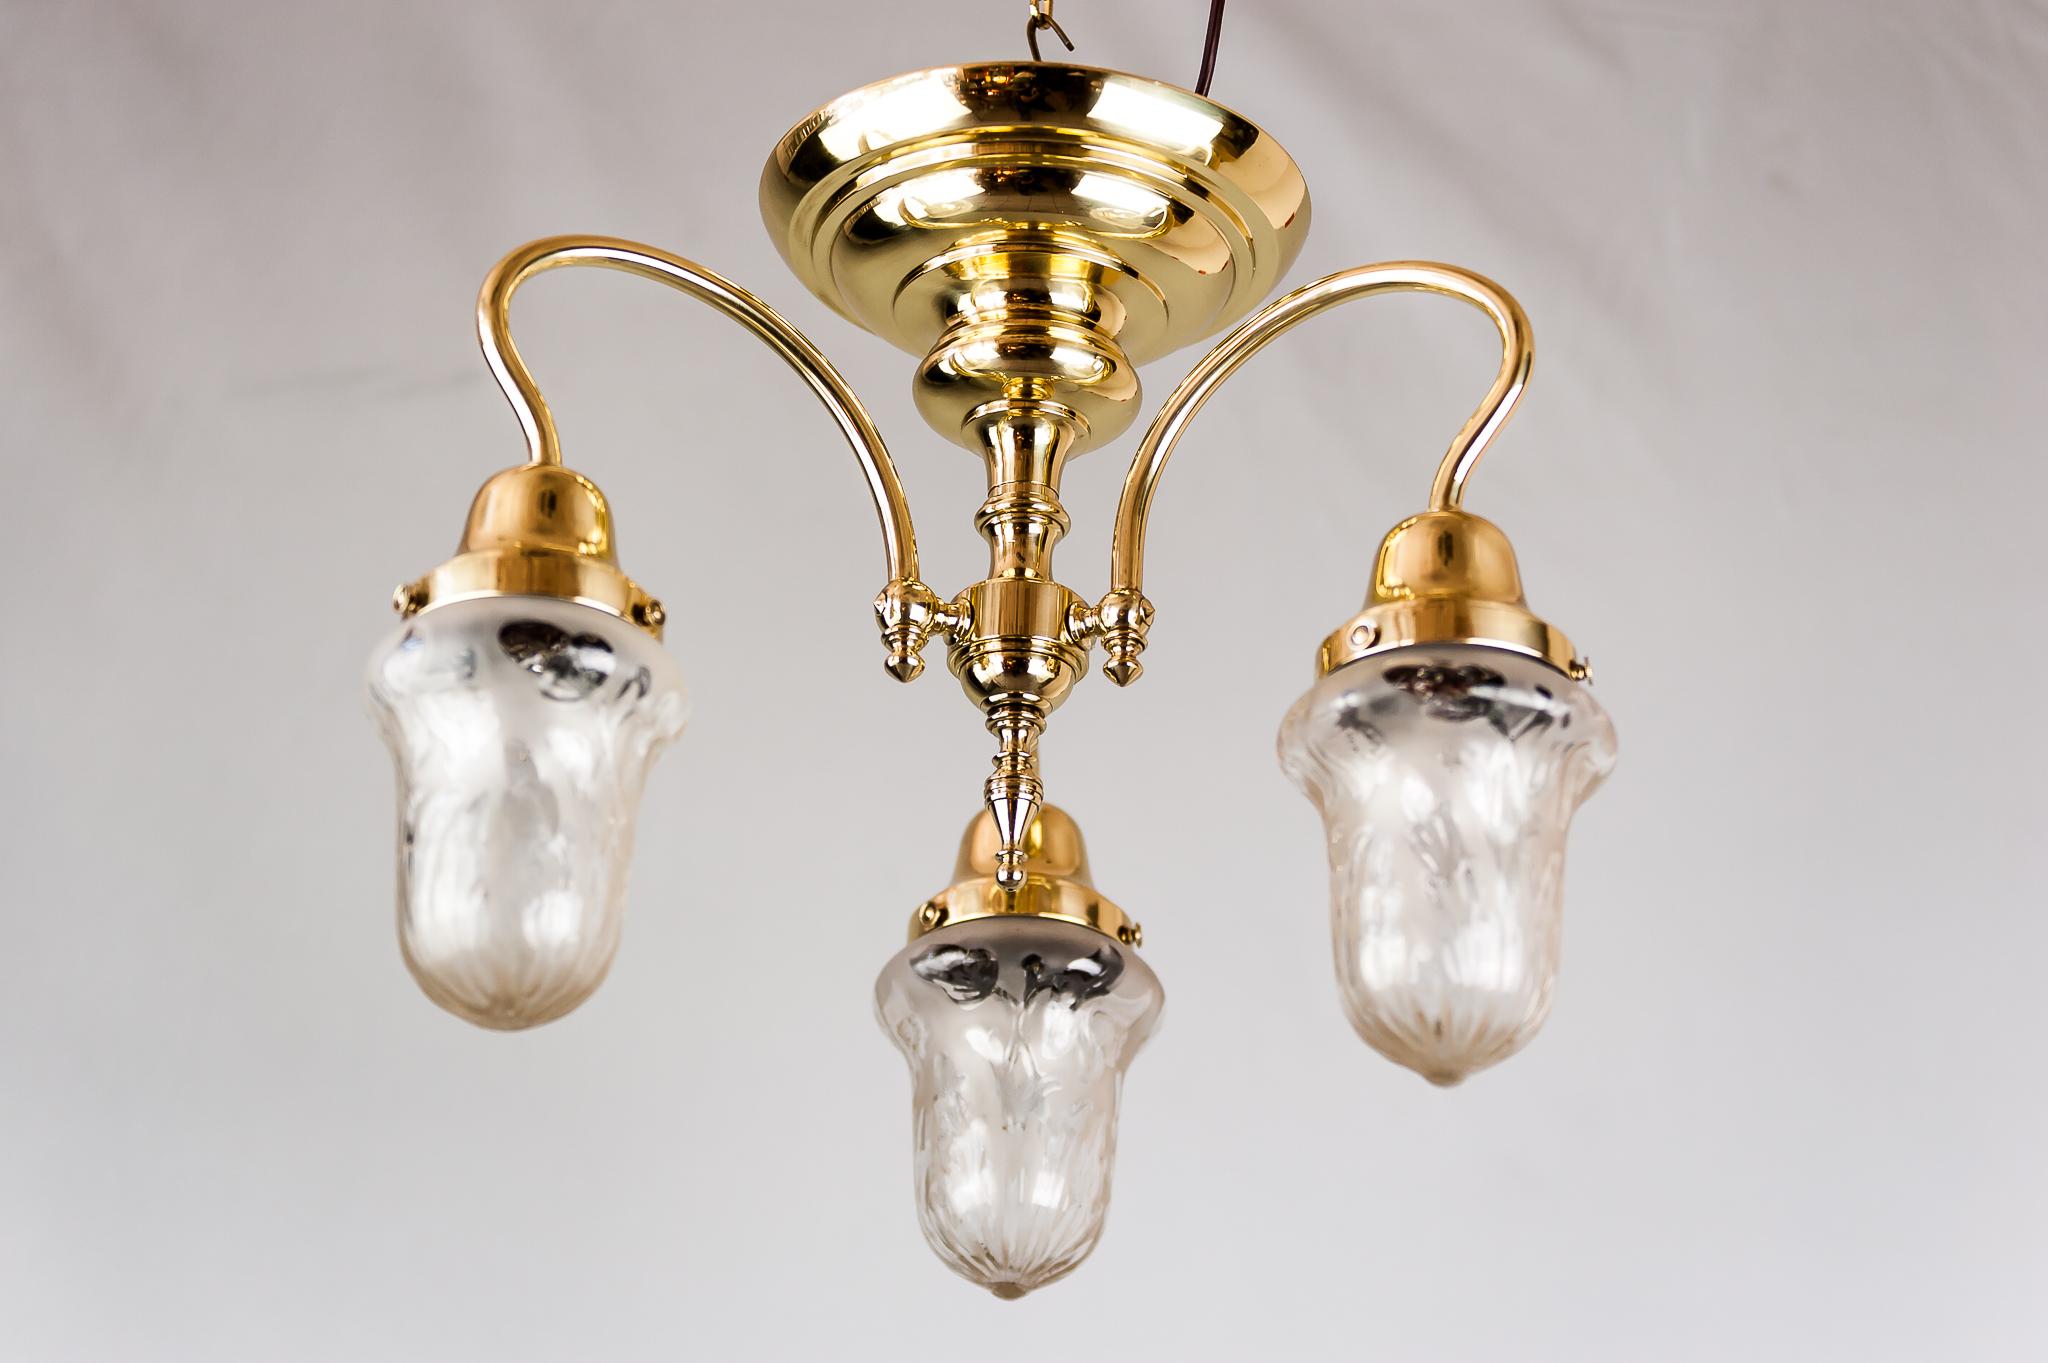 Jugendstil ceiling lamp, circa 1908 with original glass shades.
Polished and stove enameled.
 